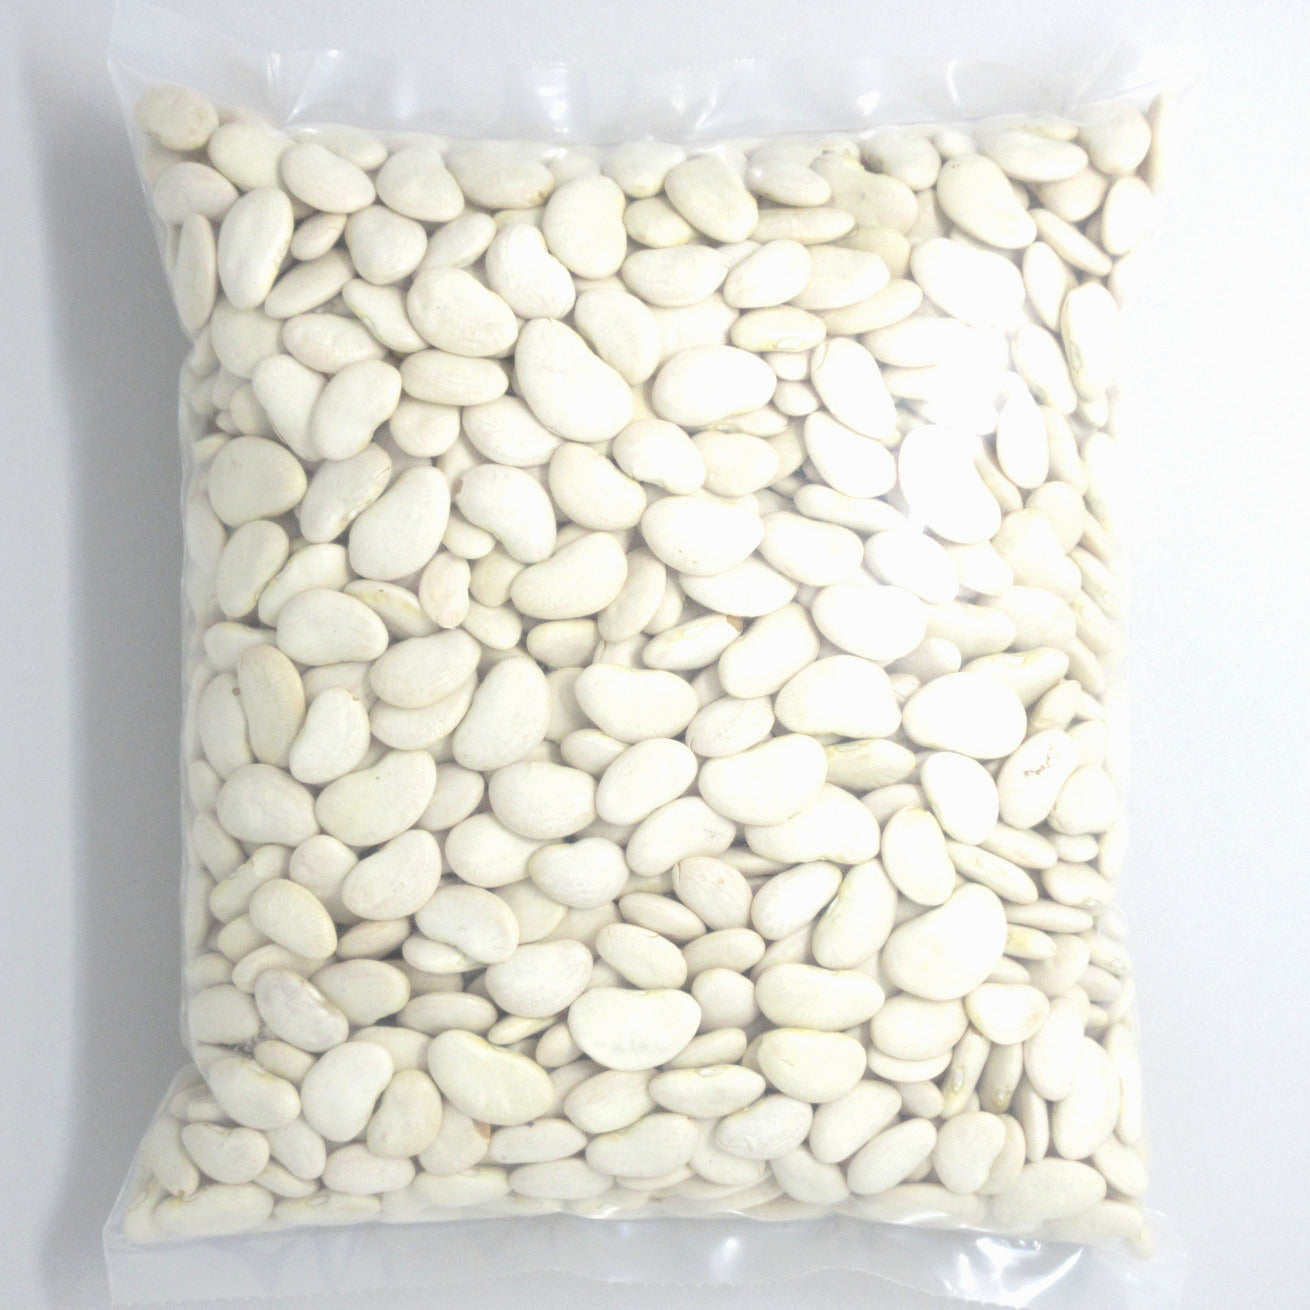 Flour Barrel product image - Large Lima Beans